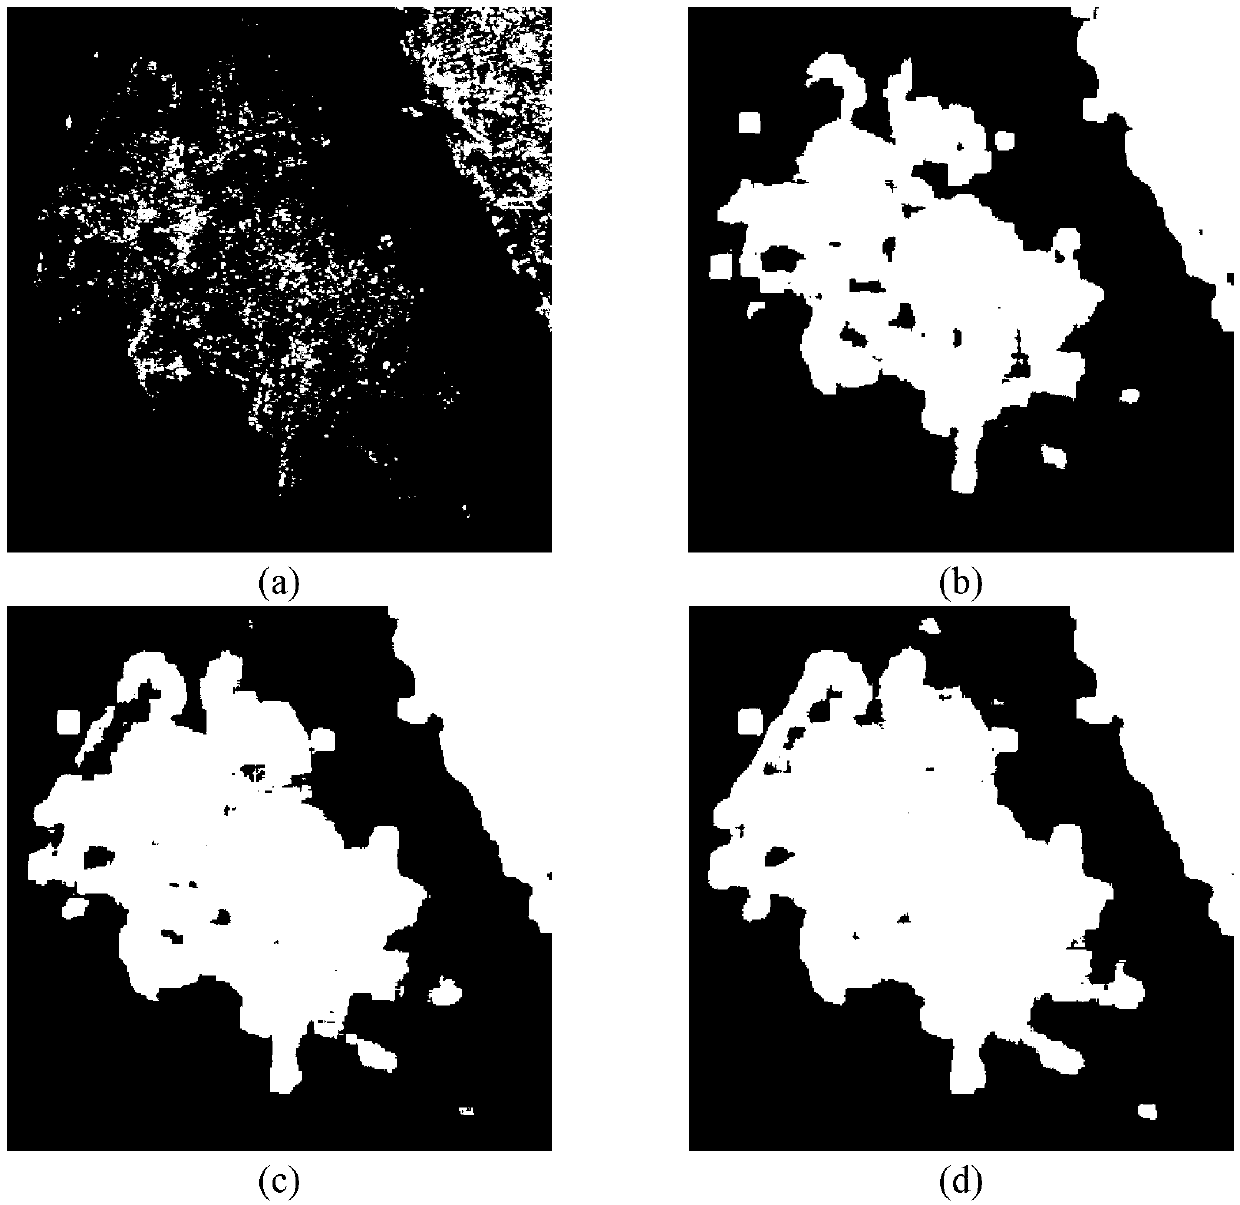 SAR image segmentation method based on feature vector integration spectral clustering